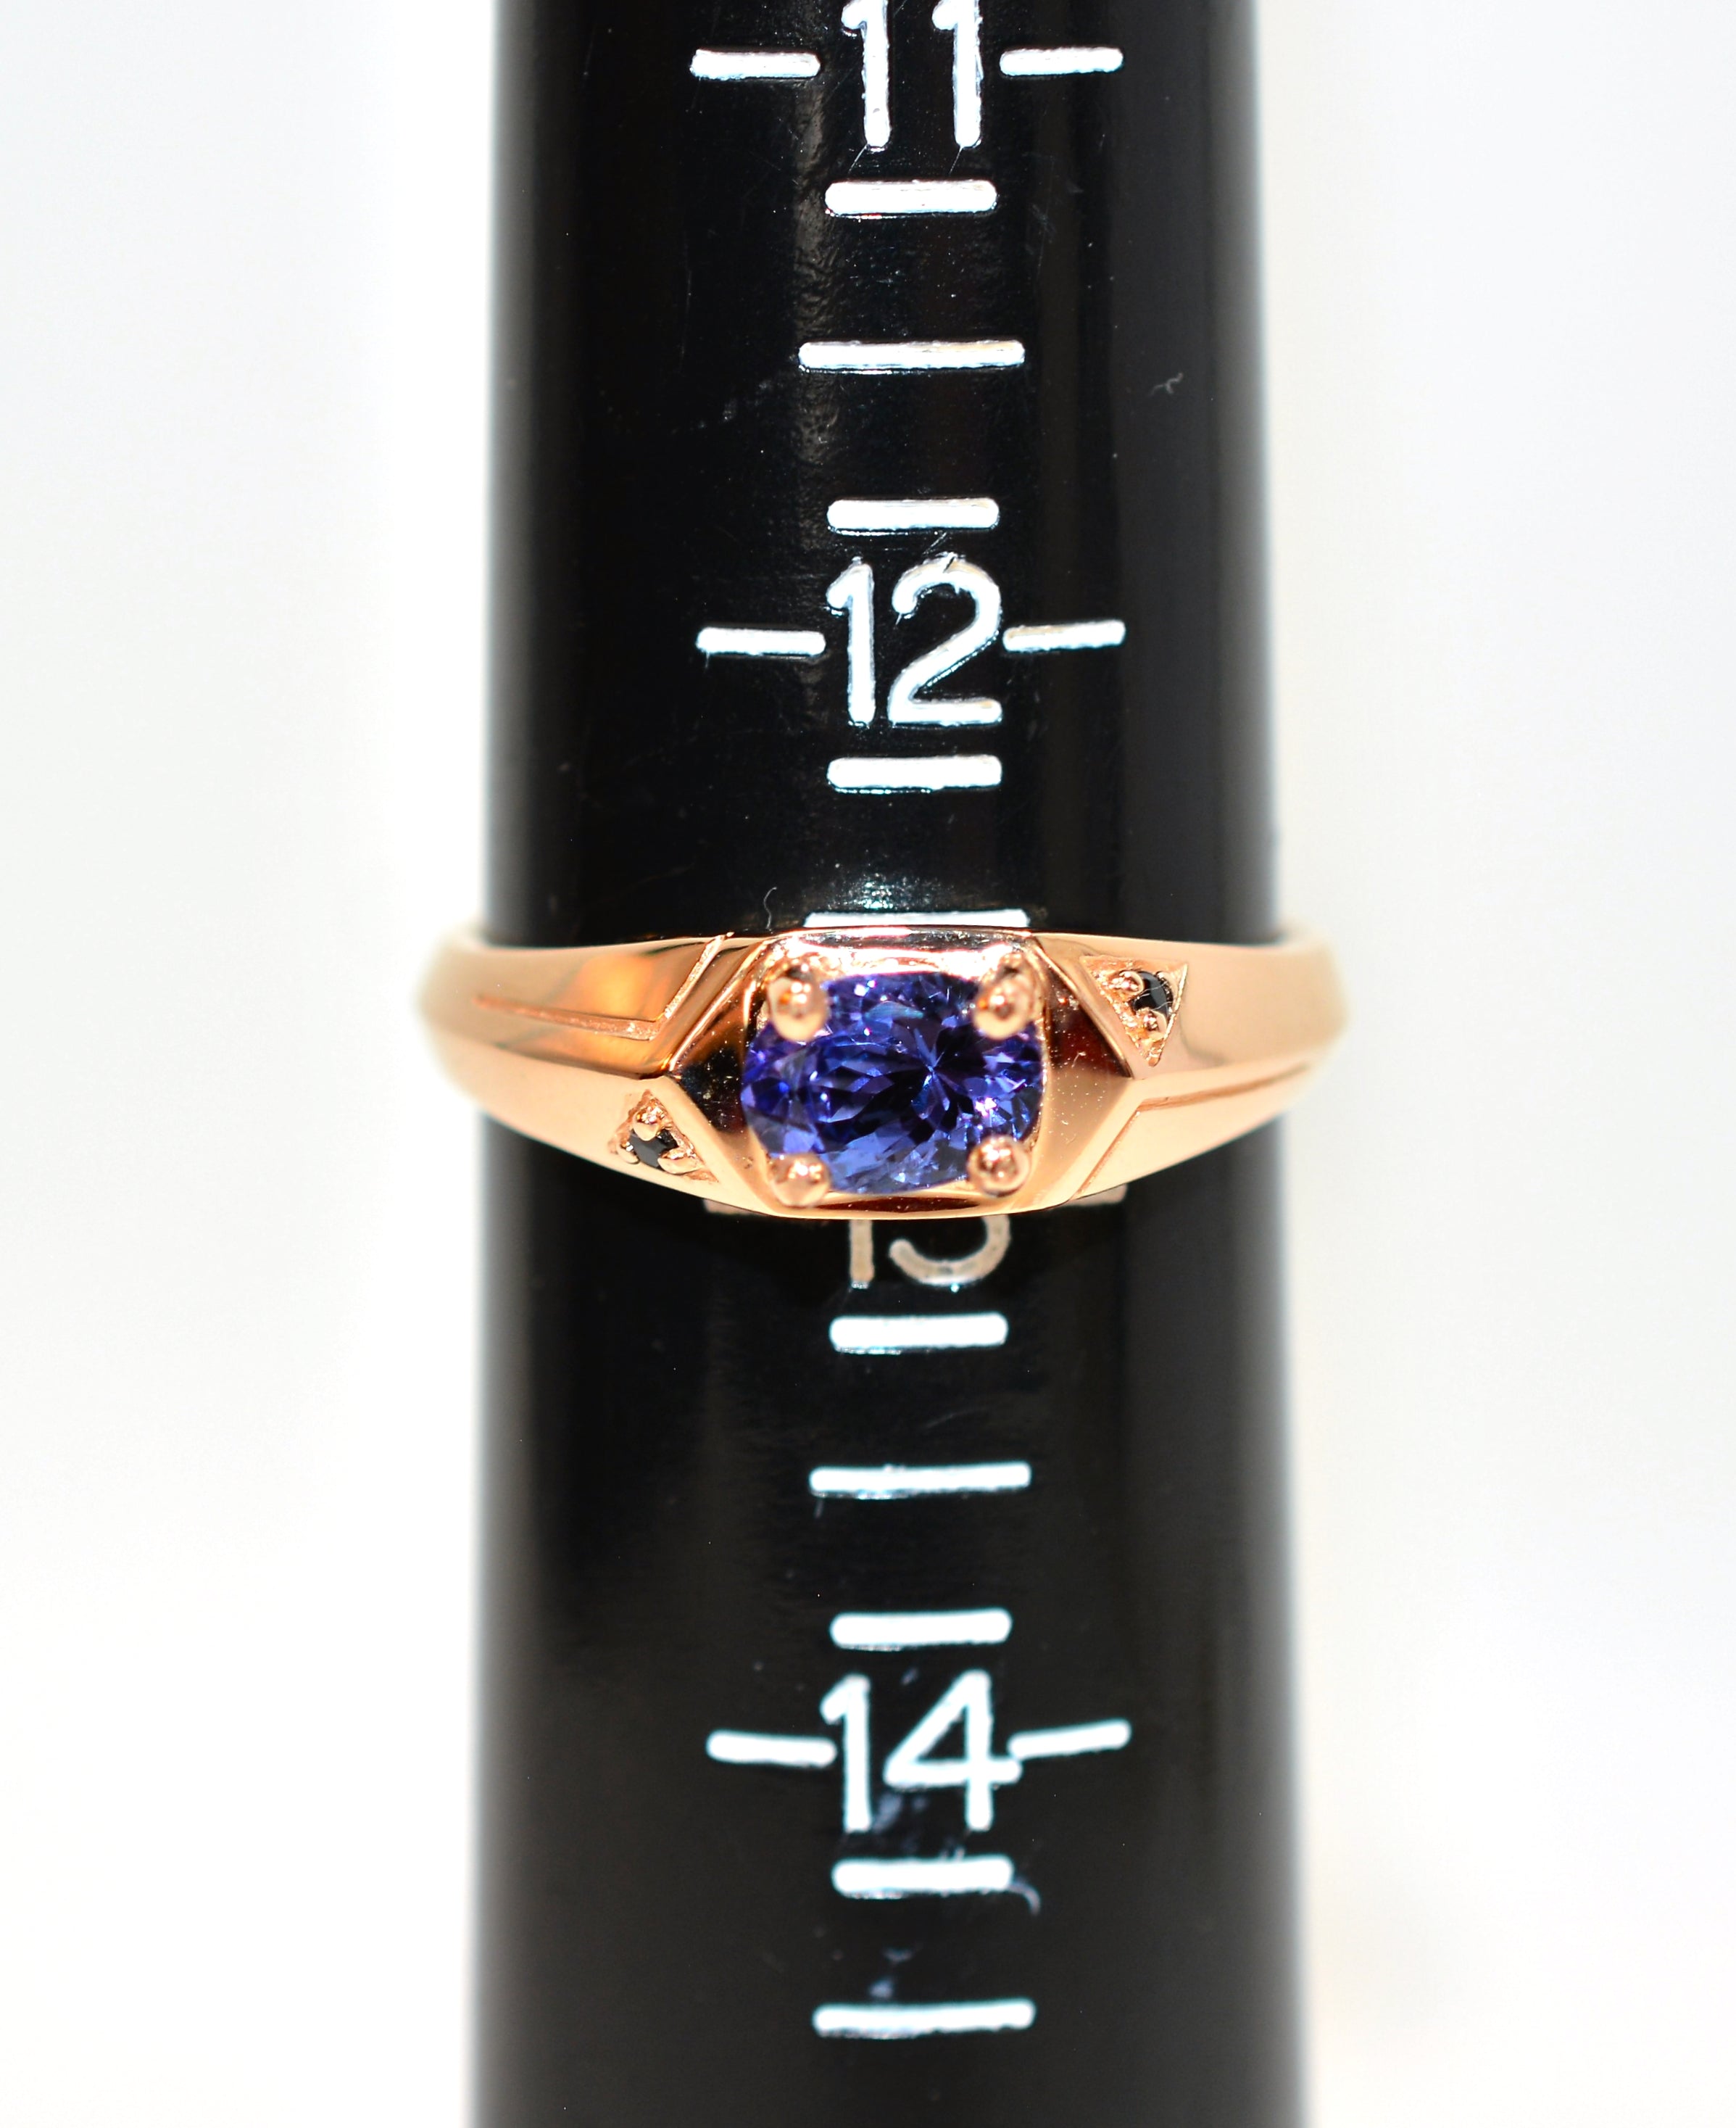 Natural Tanzanite & Onyx Ring 14K Solid Rose Gold 1.20tcw Men's Ring Gemstone Ring Birthstone Ring Cocktail Ring Estate Jewelry Fine Vintage Ring